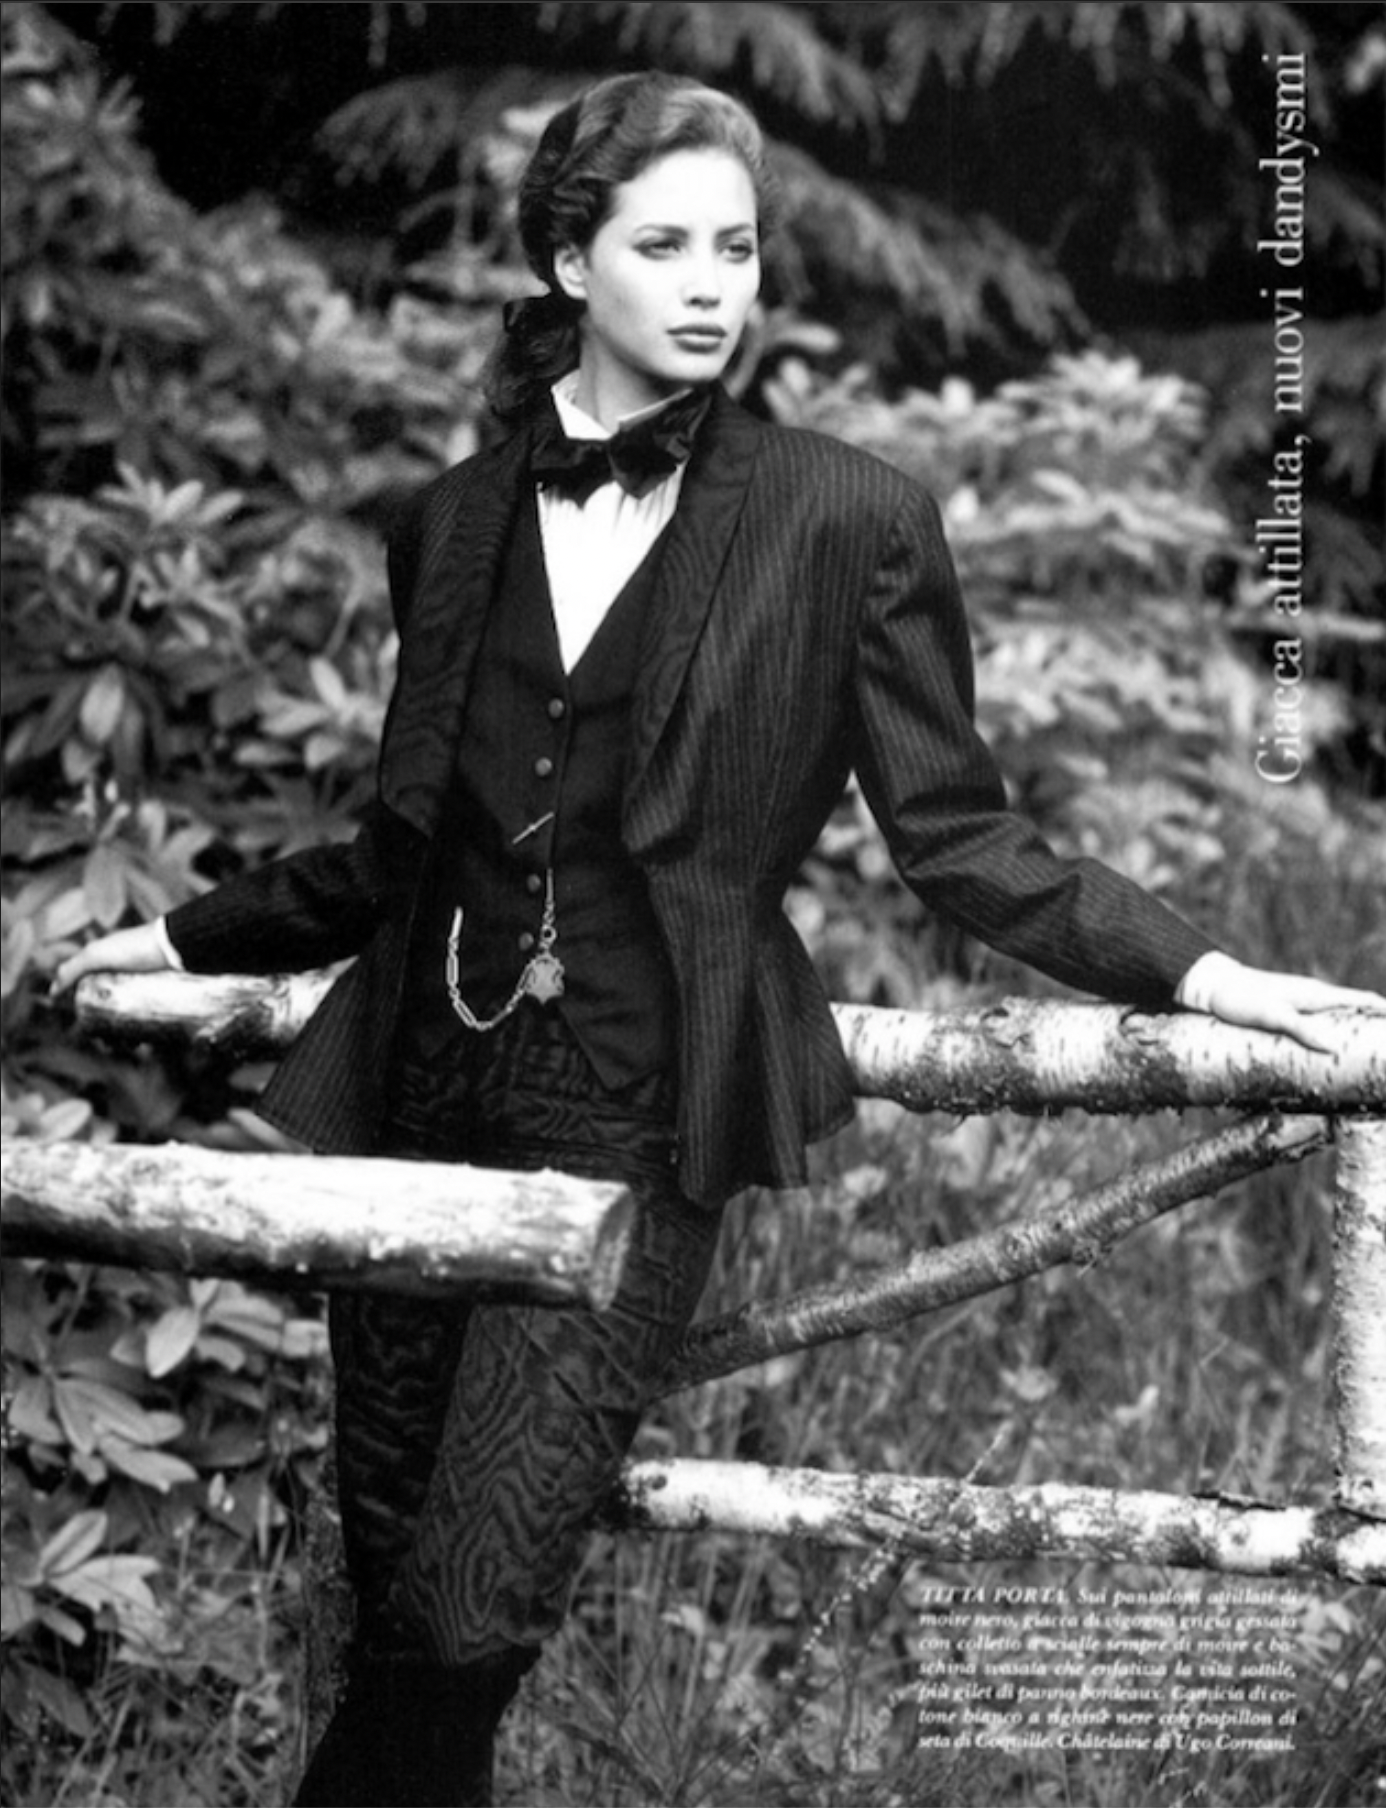 Christy-Turlington-by-David-Bailey-Vogue-Italia-September-1987-13.png